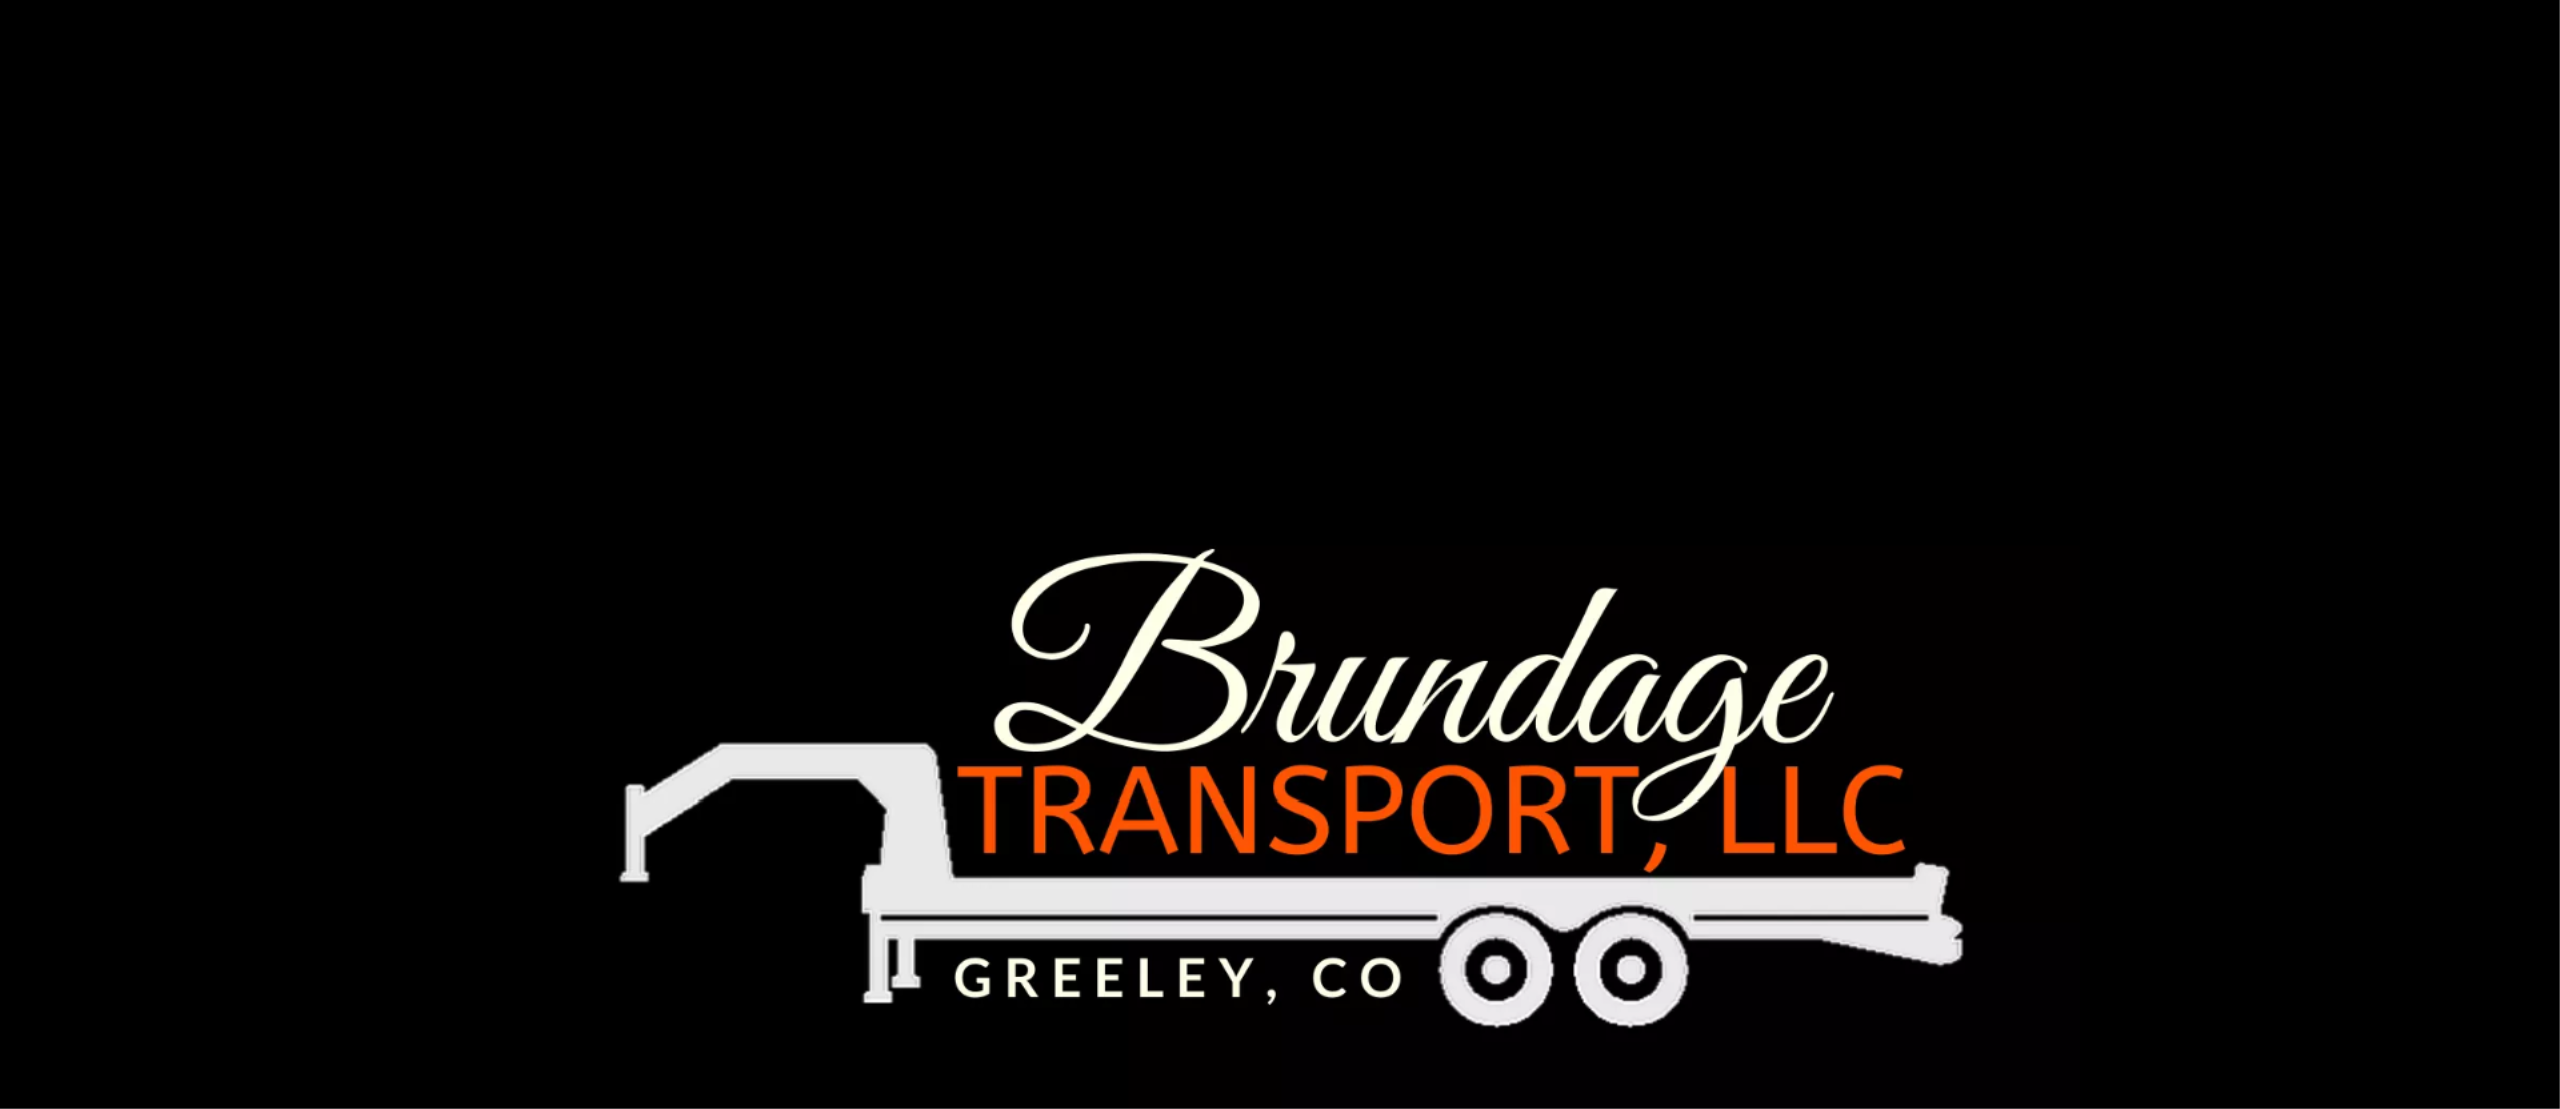 Brundage Transport, LLC Logo